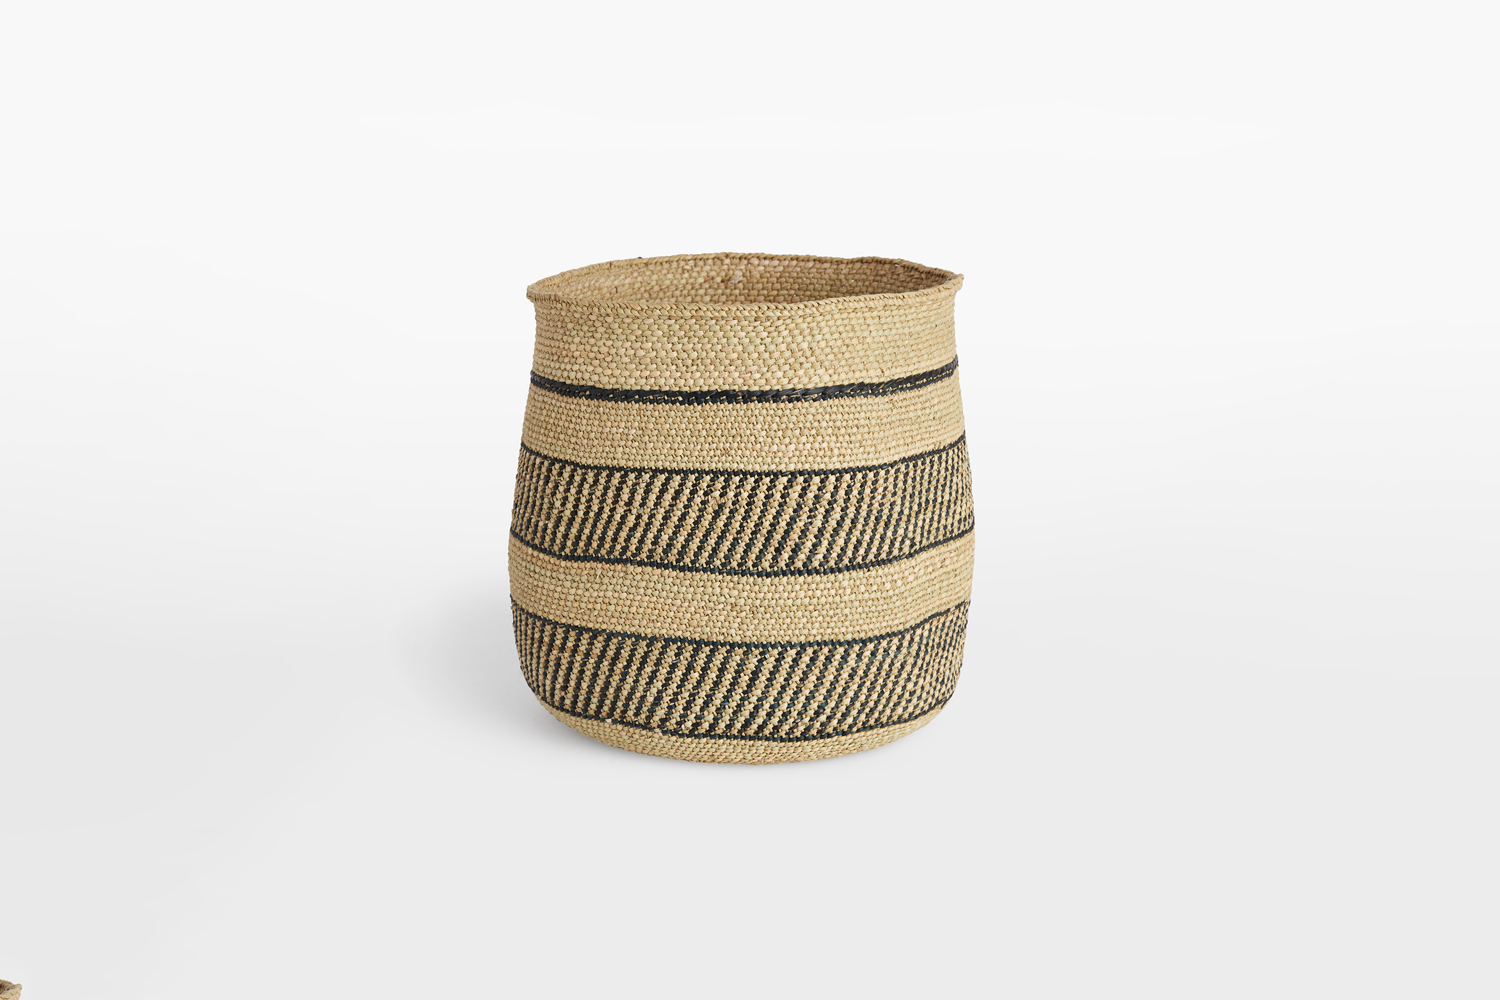 the iringa round basket is $129 at rejuvenation. 24